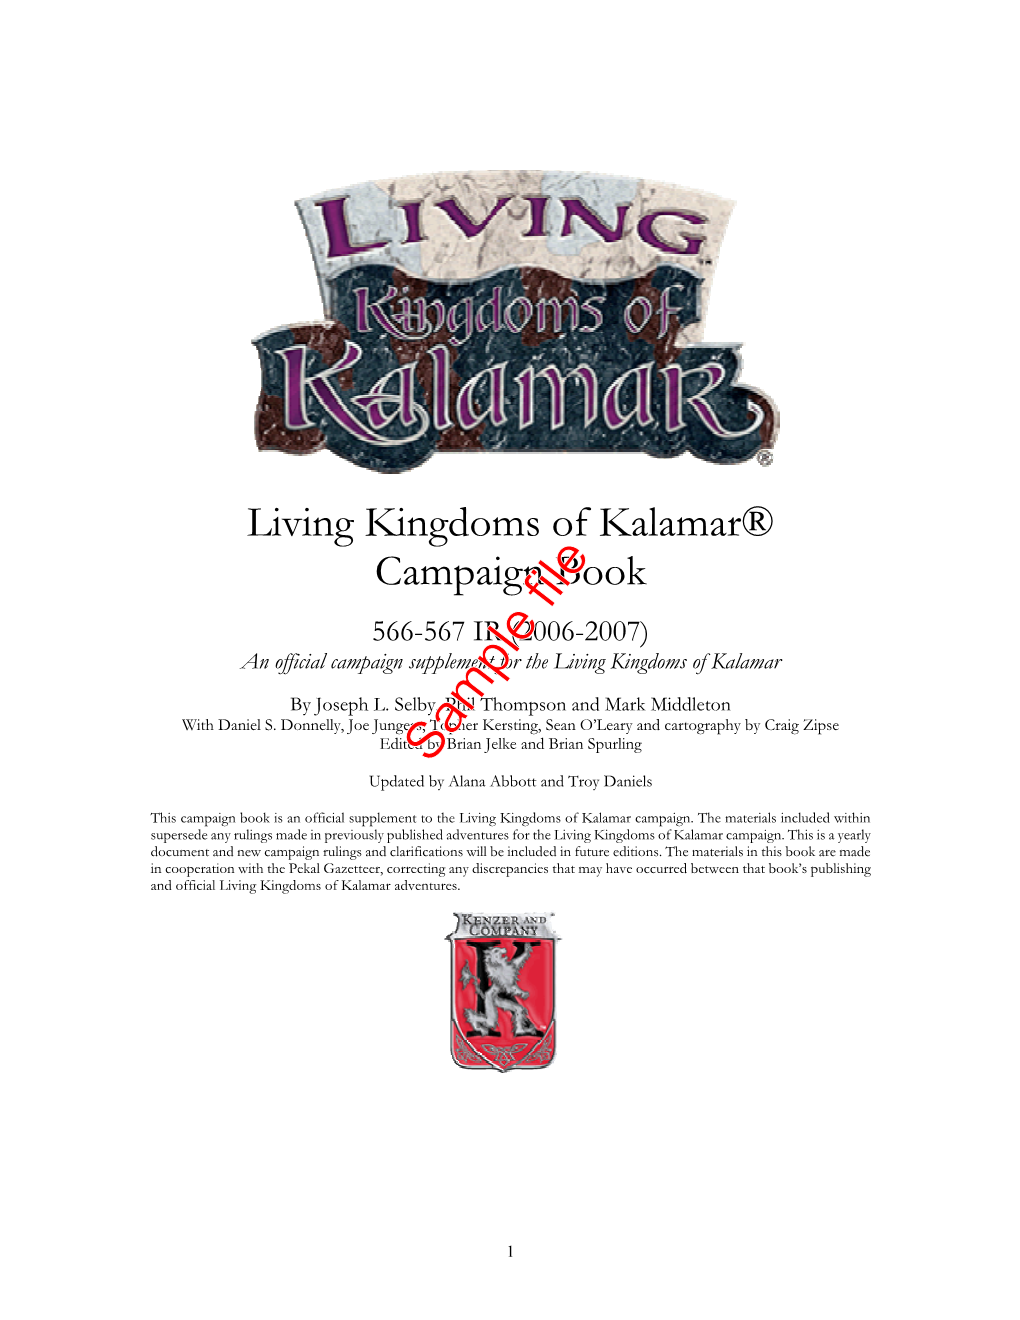 Living Kingdoms of Kalamar Campaign Book 556